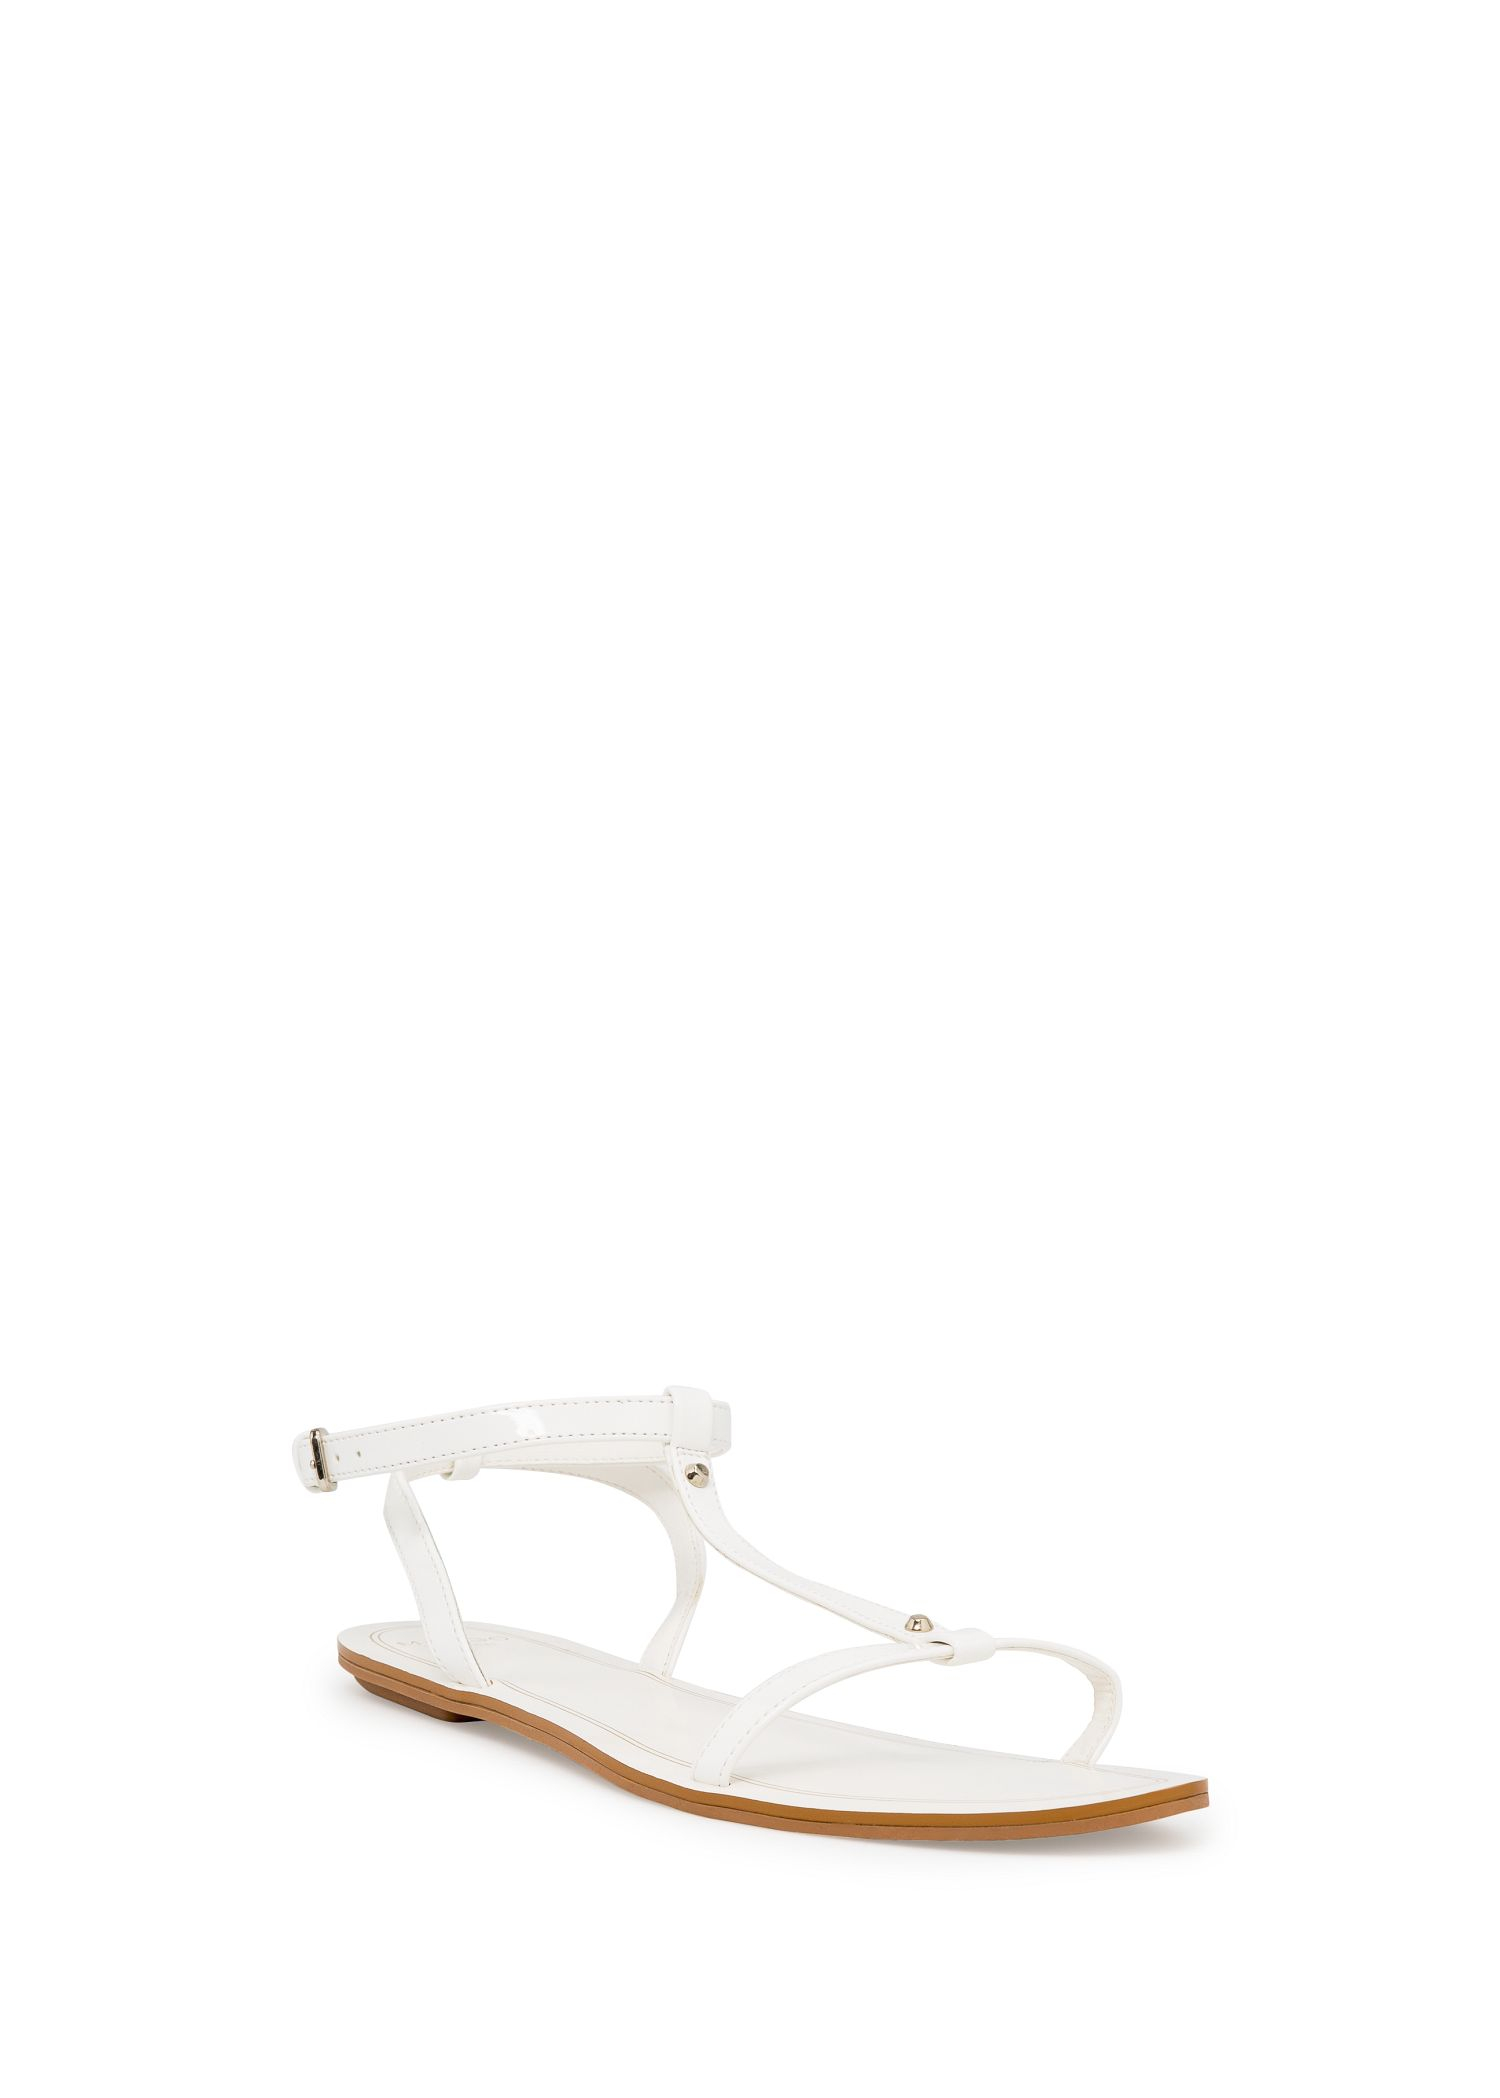 Mango Patent Flat Sandals in White - Lyst